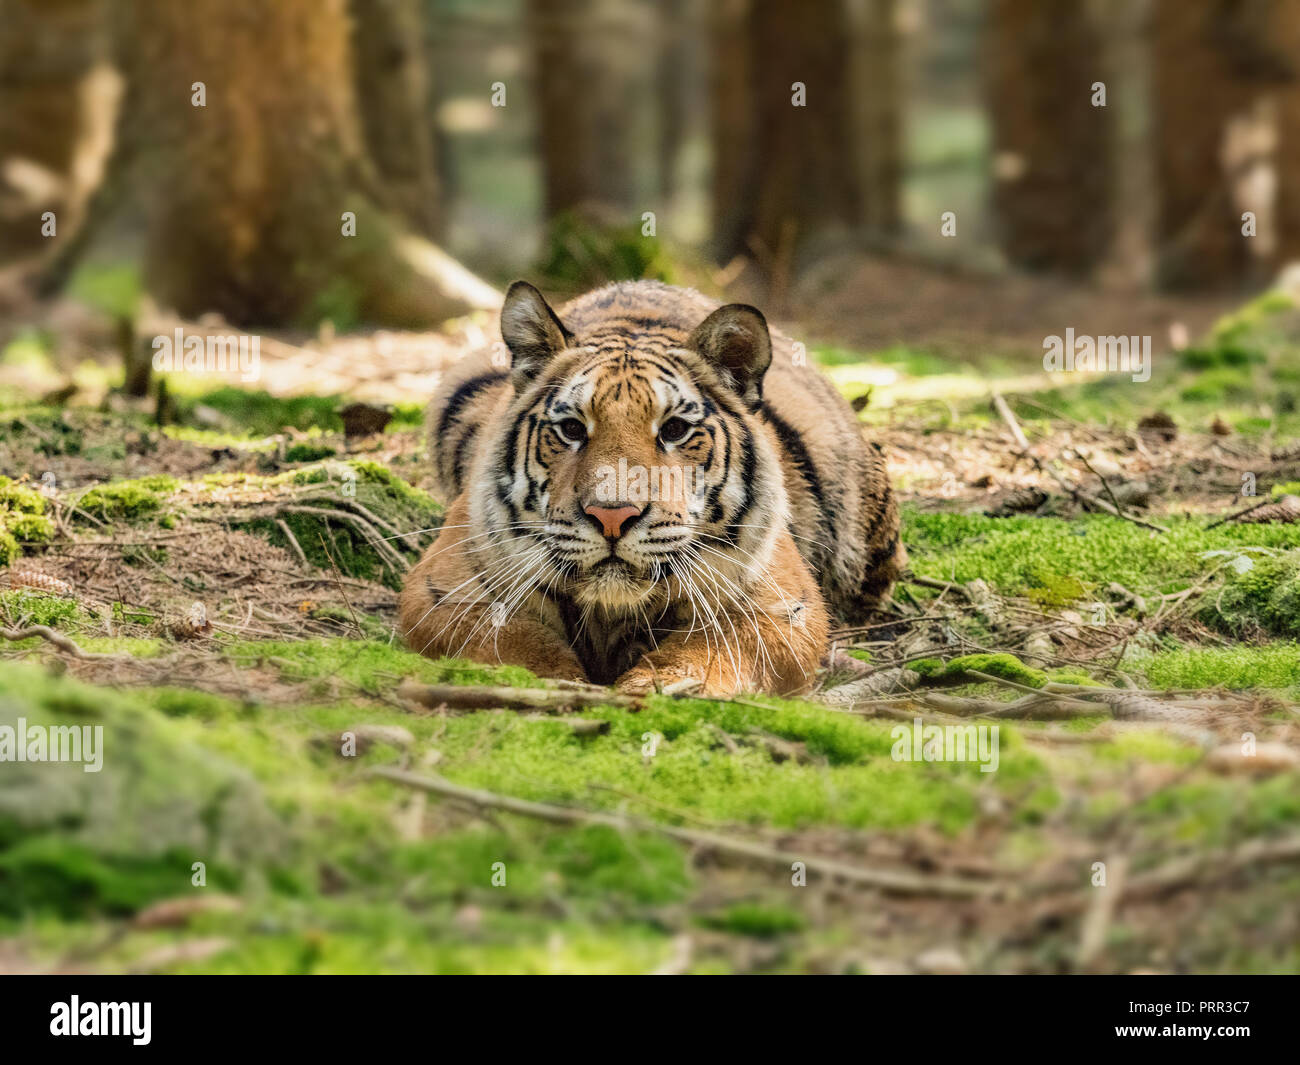 Tiger portrait. Tiger in wild nature. Action wildlife scene, danger animal. eautiful Siberian tiger in tajga, Russia. Stock Photo